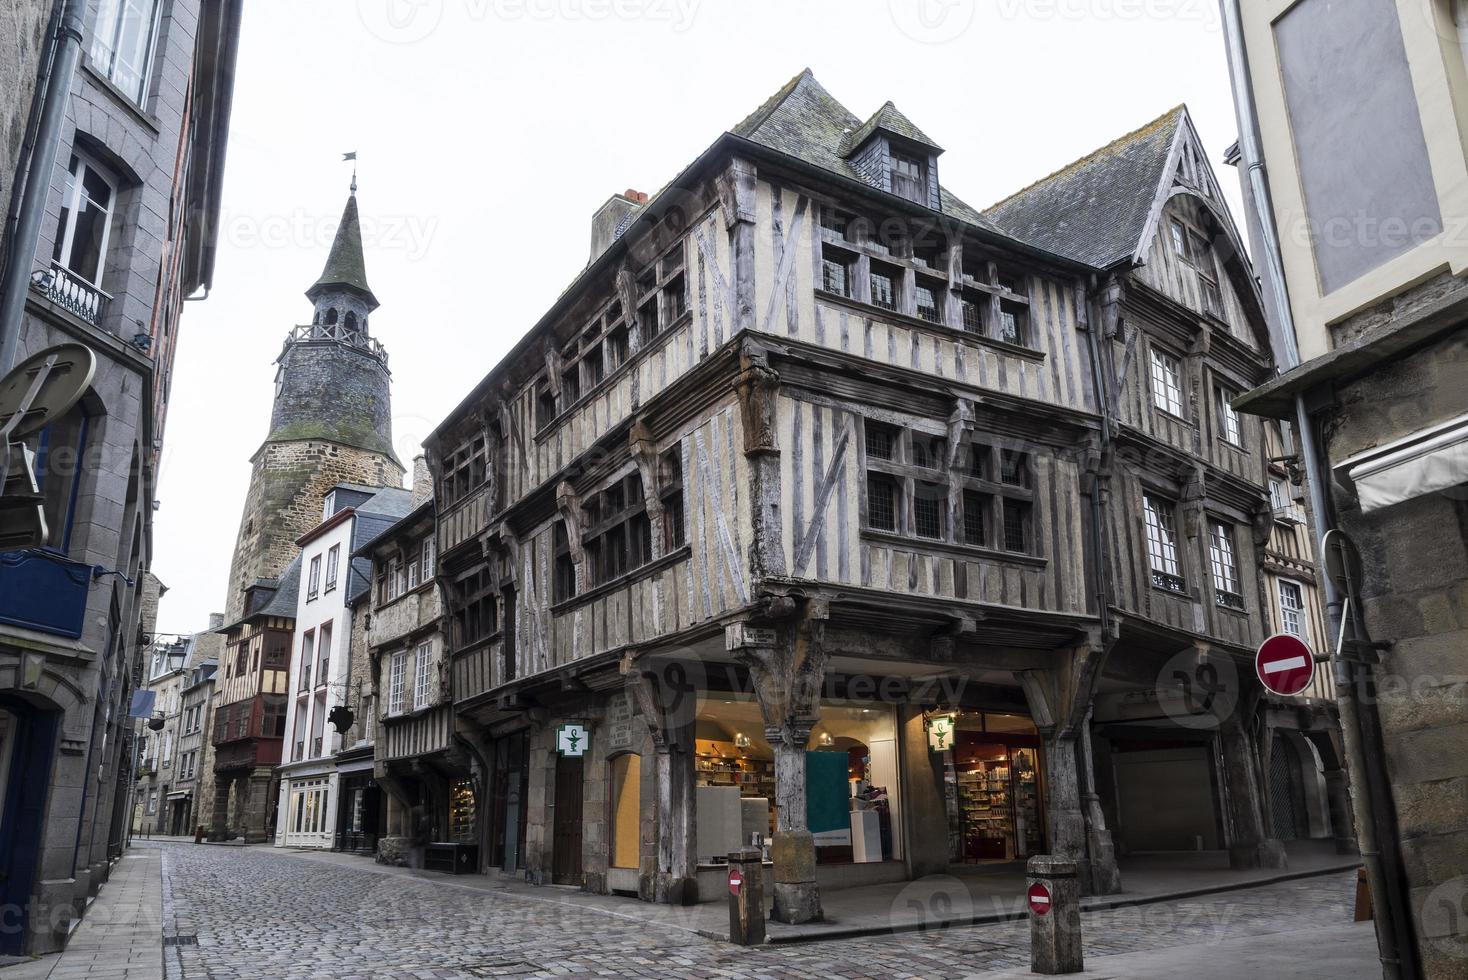 Constructions médiévales en Bretagne, France photo